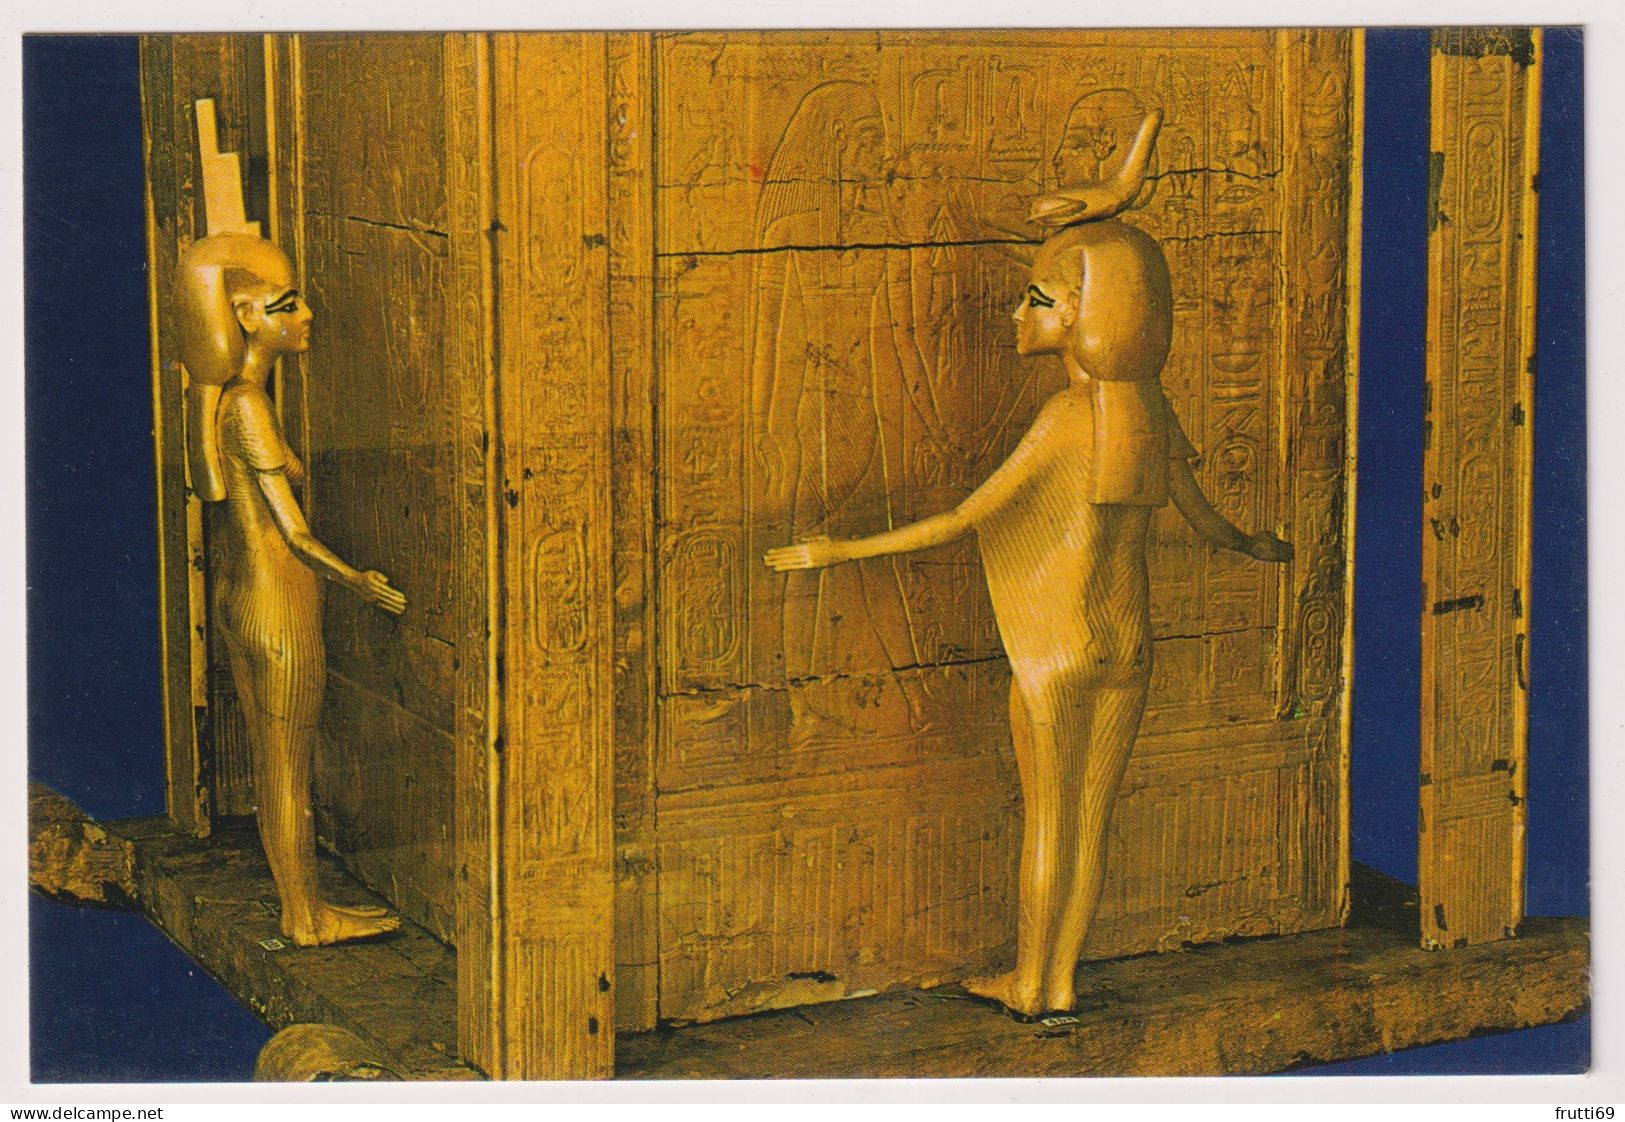 AK 198270 EGYPT -   Cairo - The Egyptian Museum - Tutankhamen's Treasures - Large Gold Canopie Chest - Museen